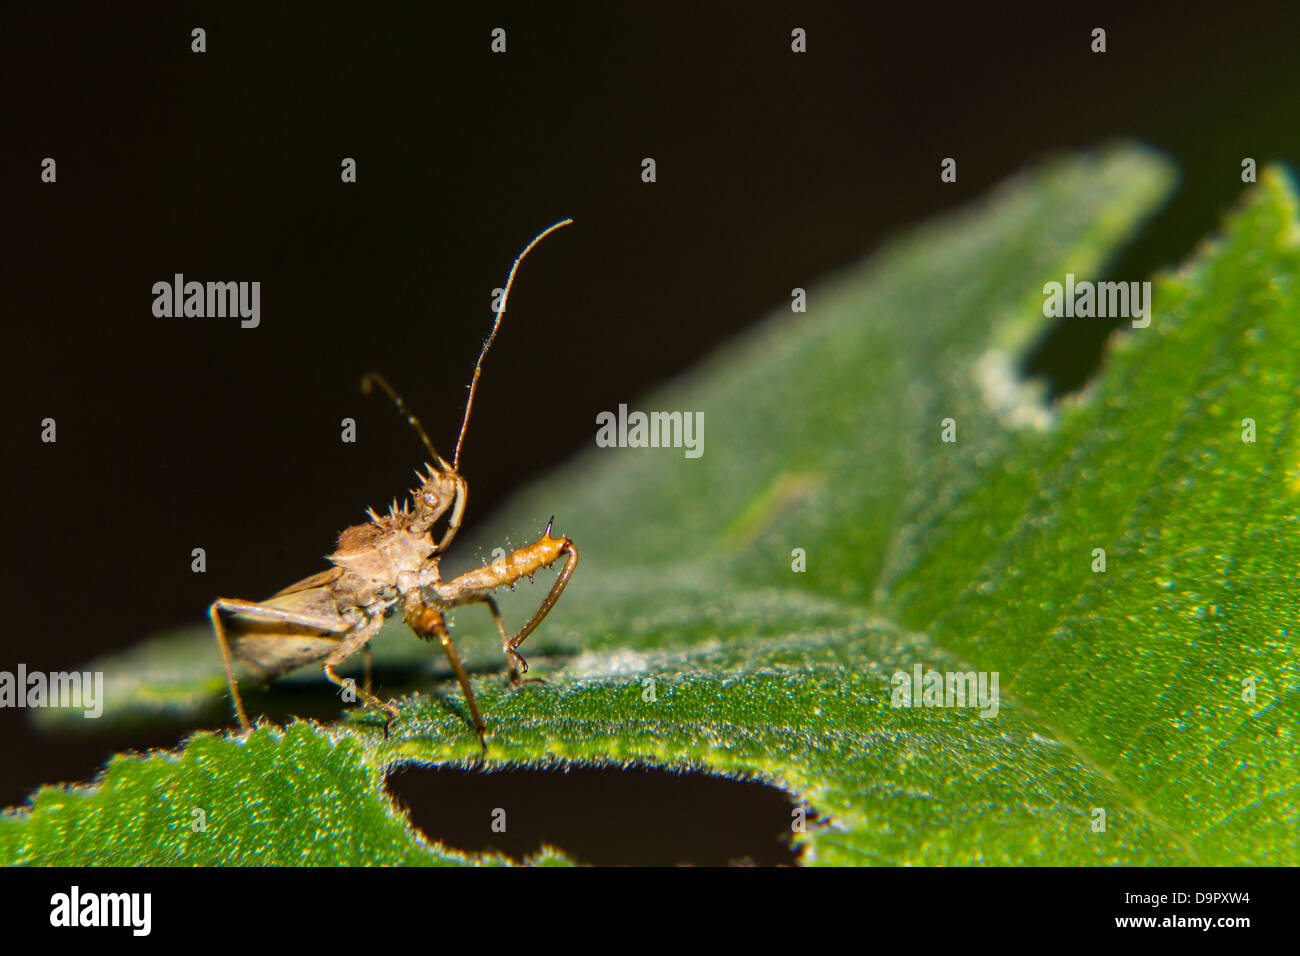 Insekten auf grünes Blatt in freier Wildbahn Stockfoto